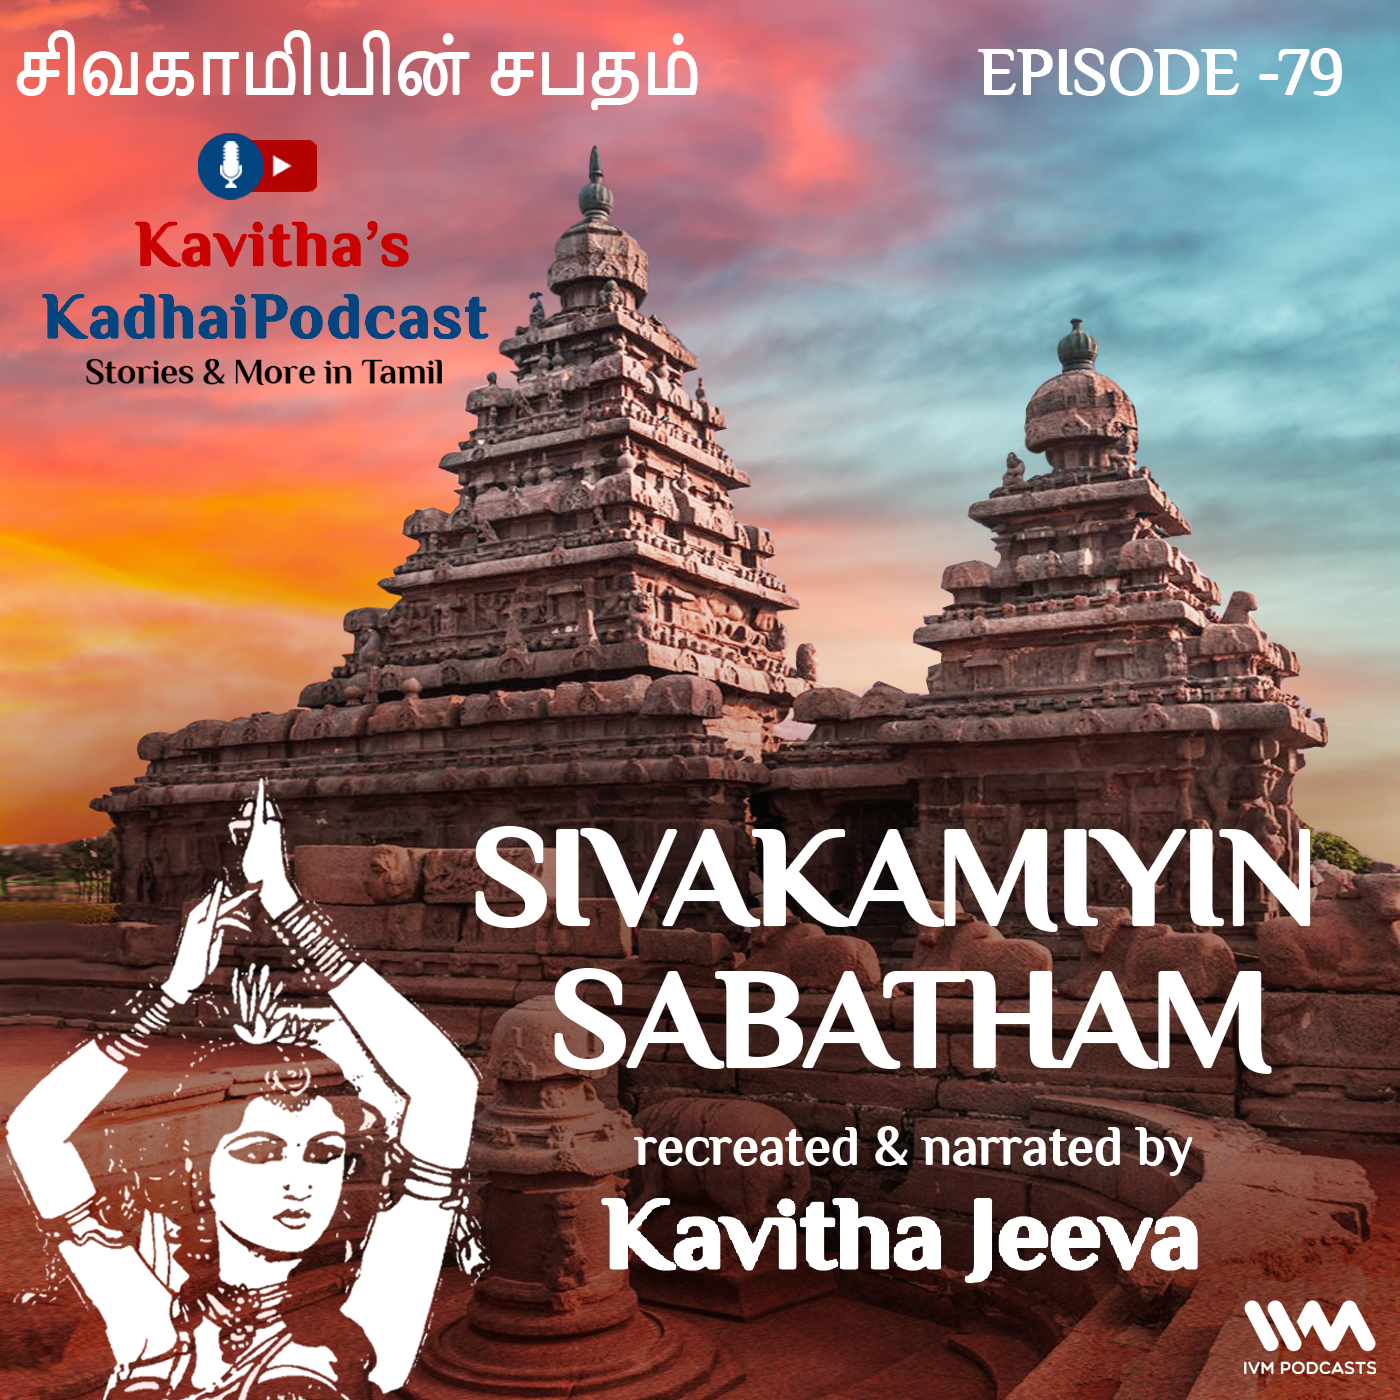 KadhaiPodcast’s Sivakamiyin Sabatham - Episode # 79